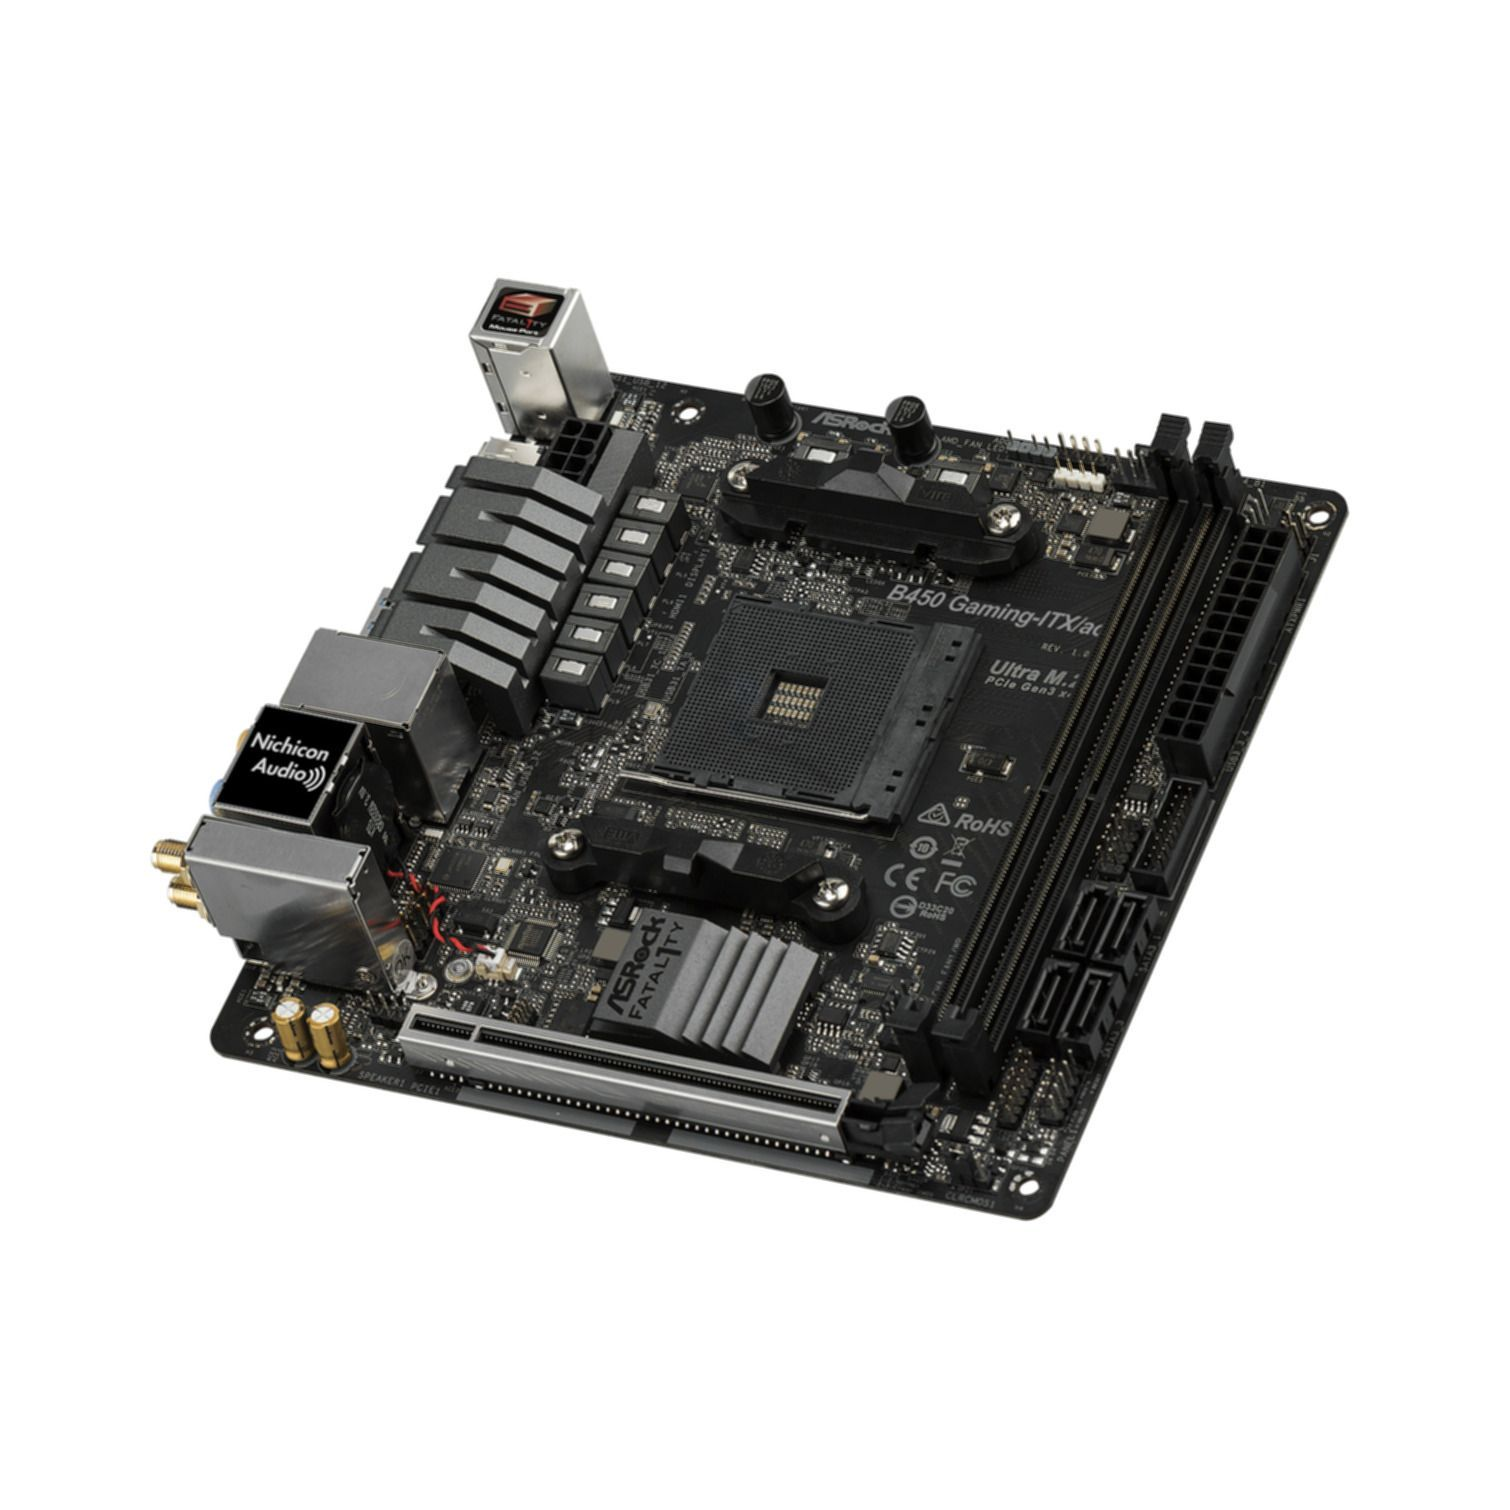 ASROCK Fatal1ty B450 Gaming-ITX/ac Mainboards schwarz